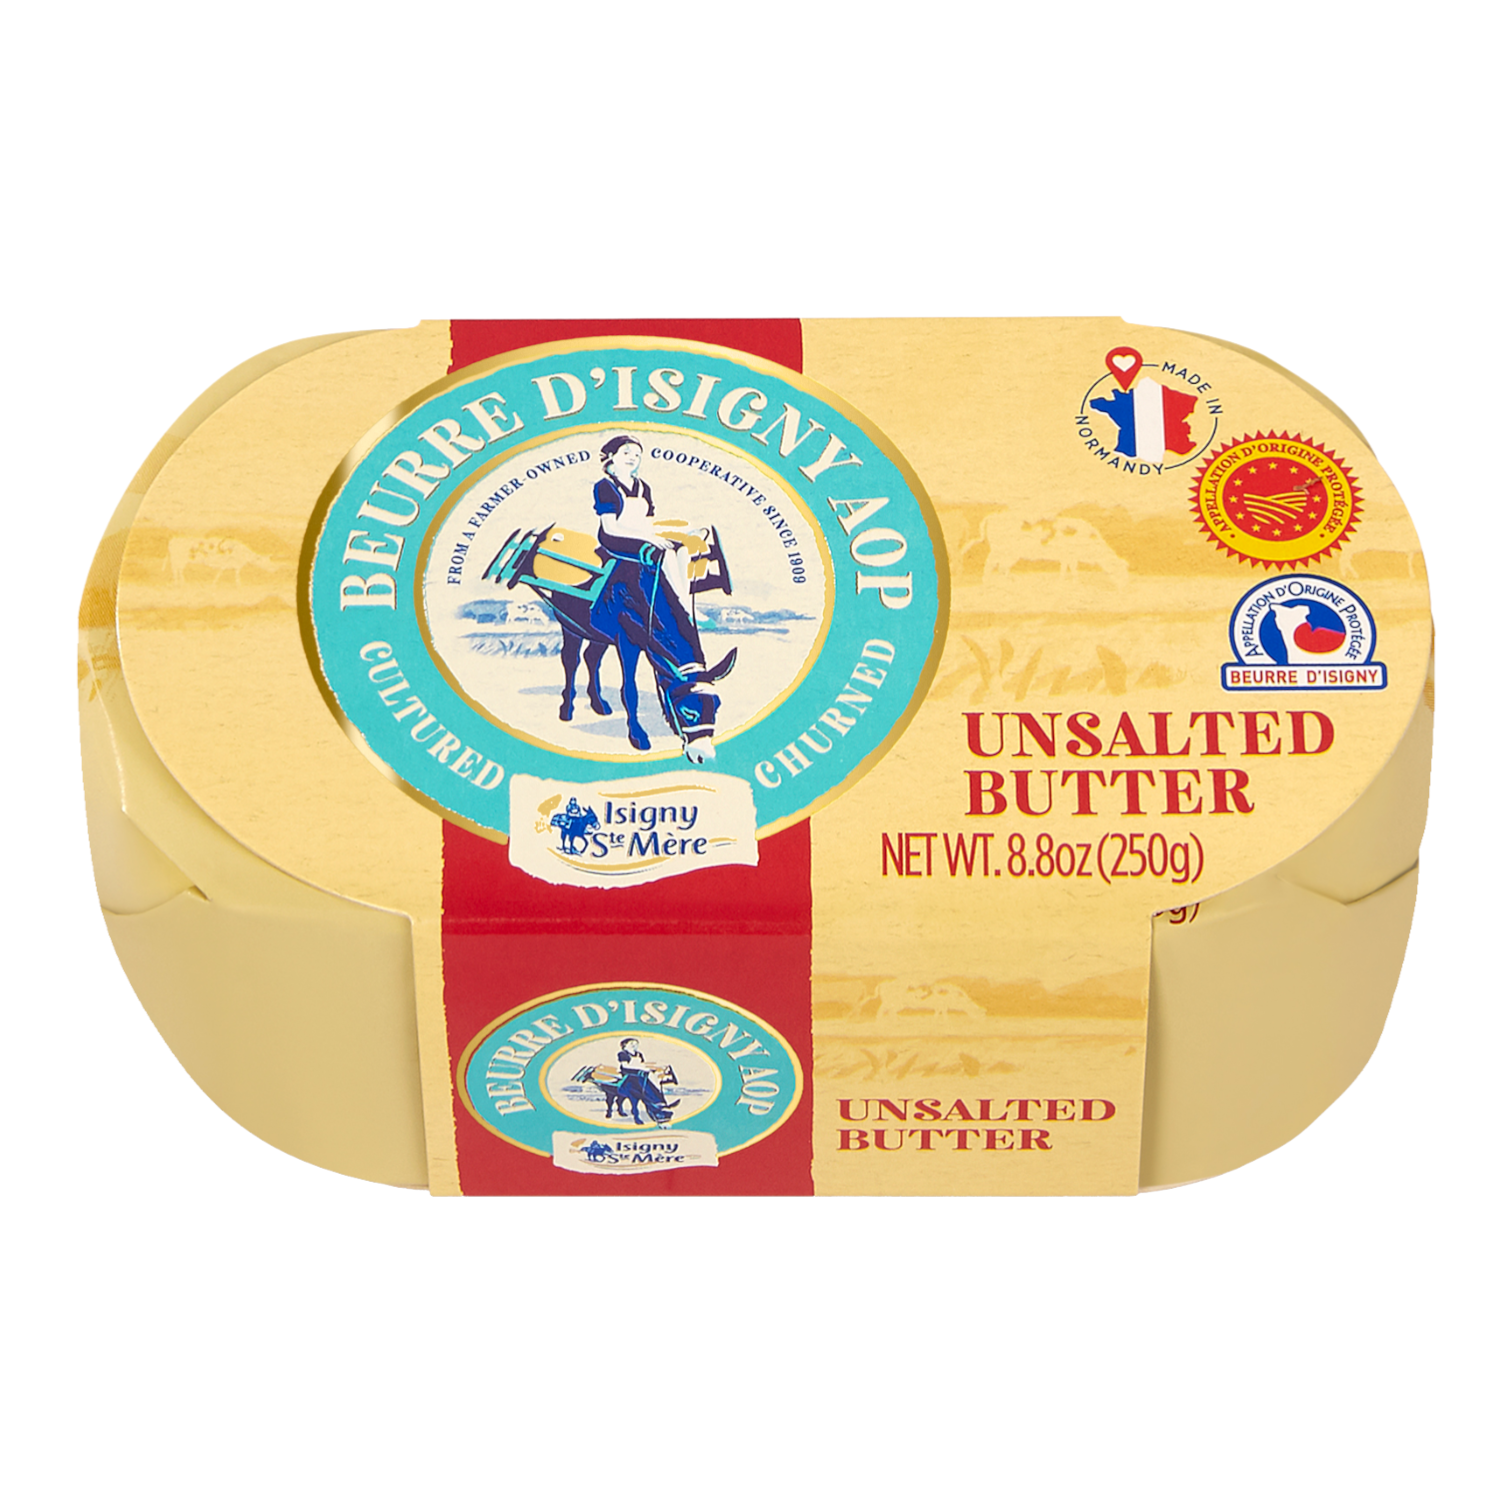 Beurre de Baratte Doux - Unsalted Butter